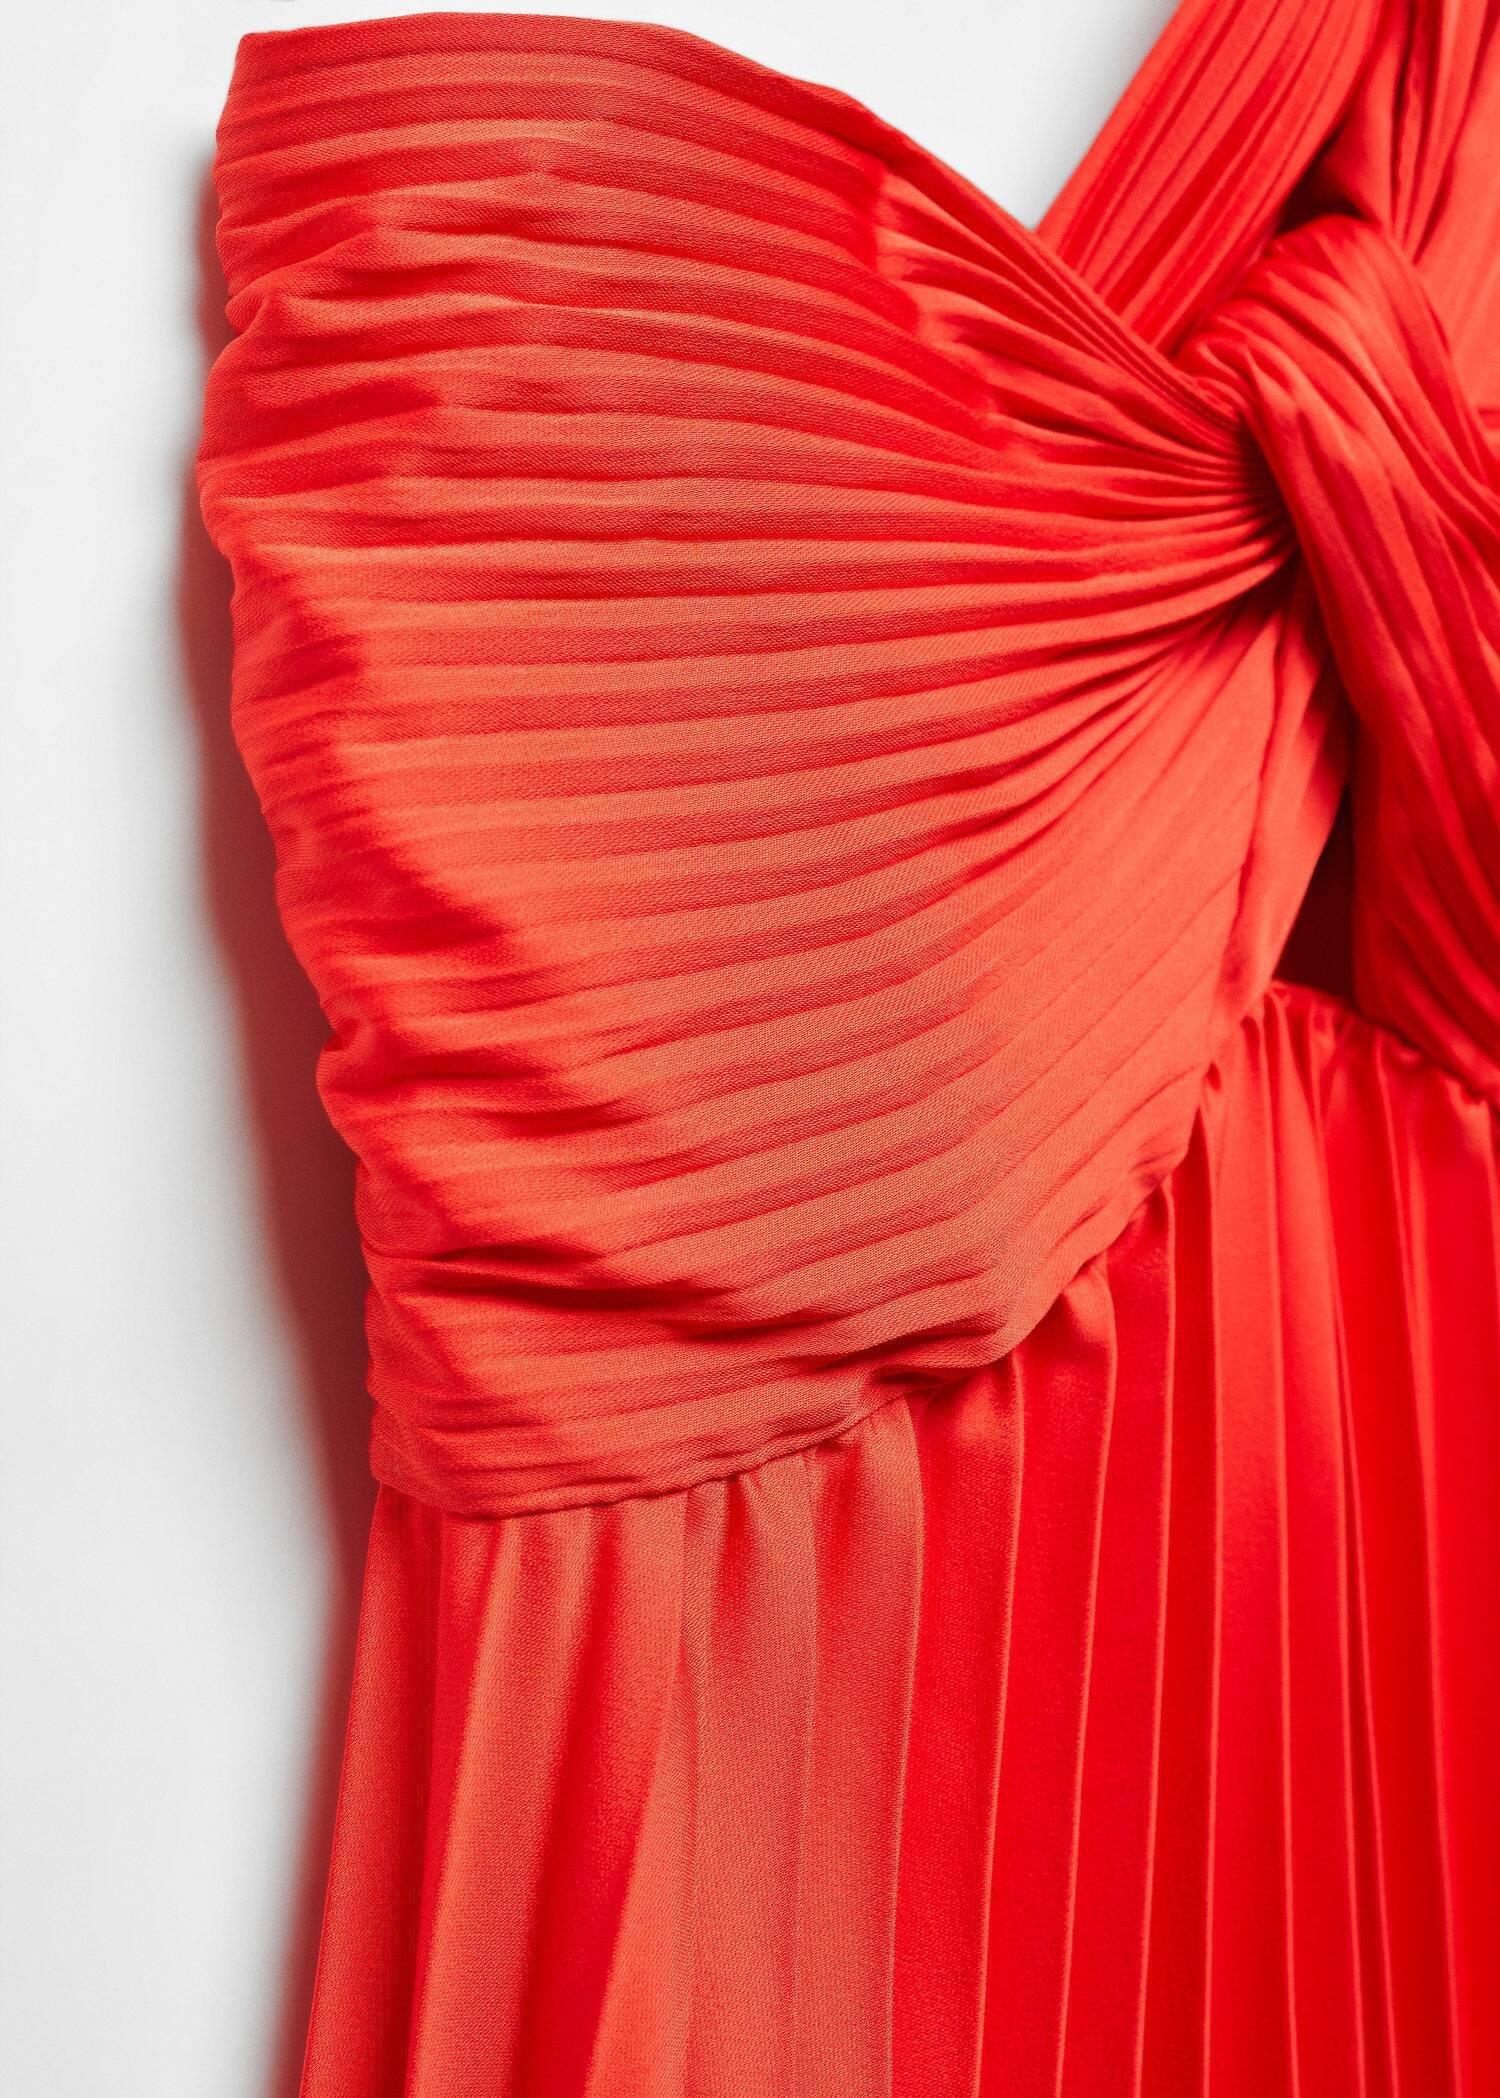 Mango - Red Asymmetrical Pleated Dress